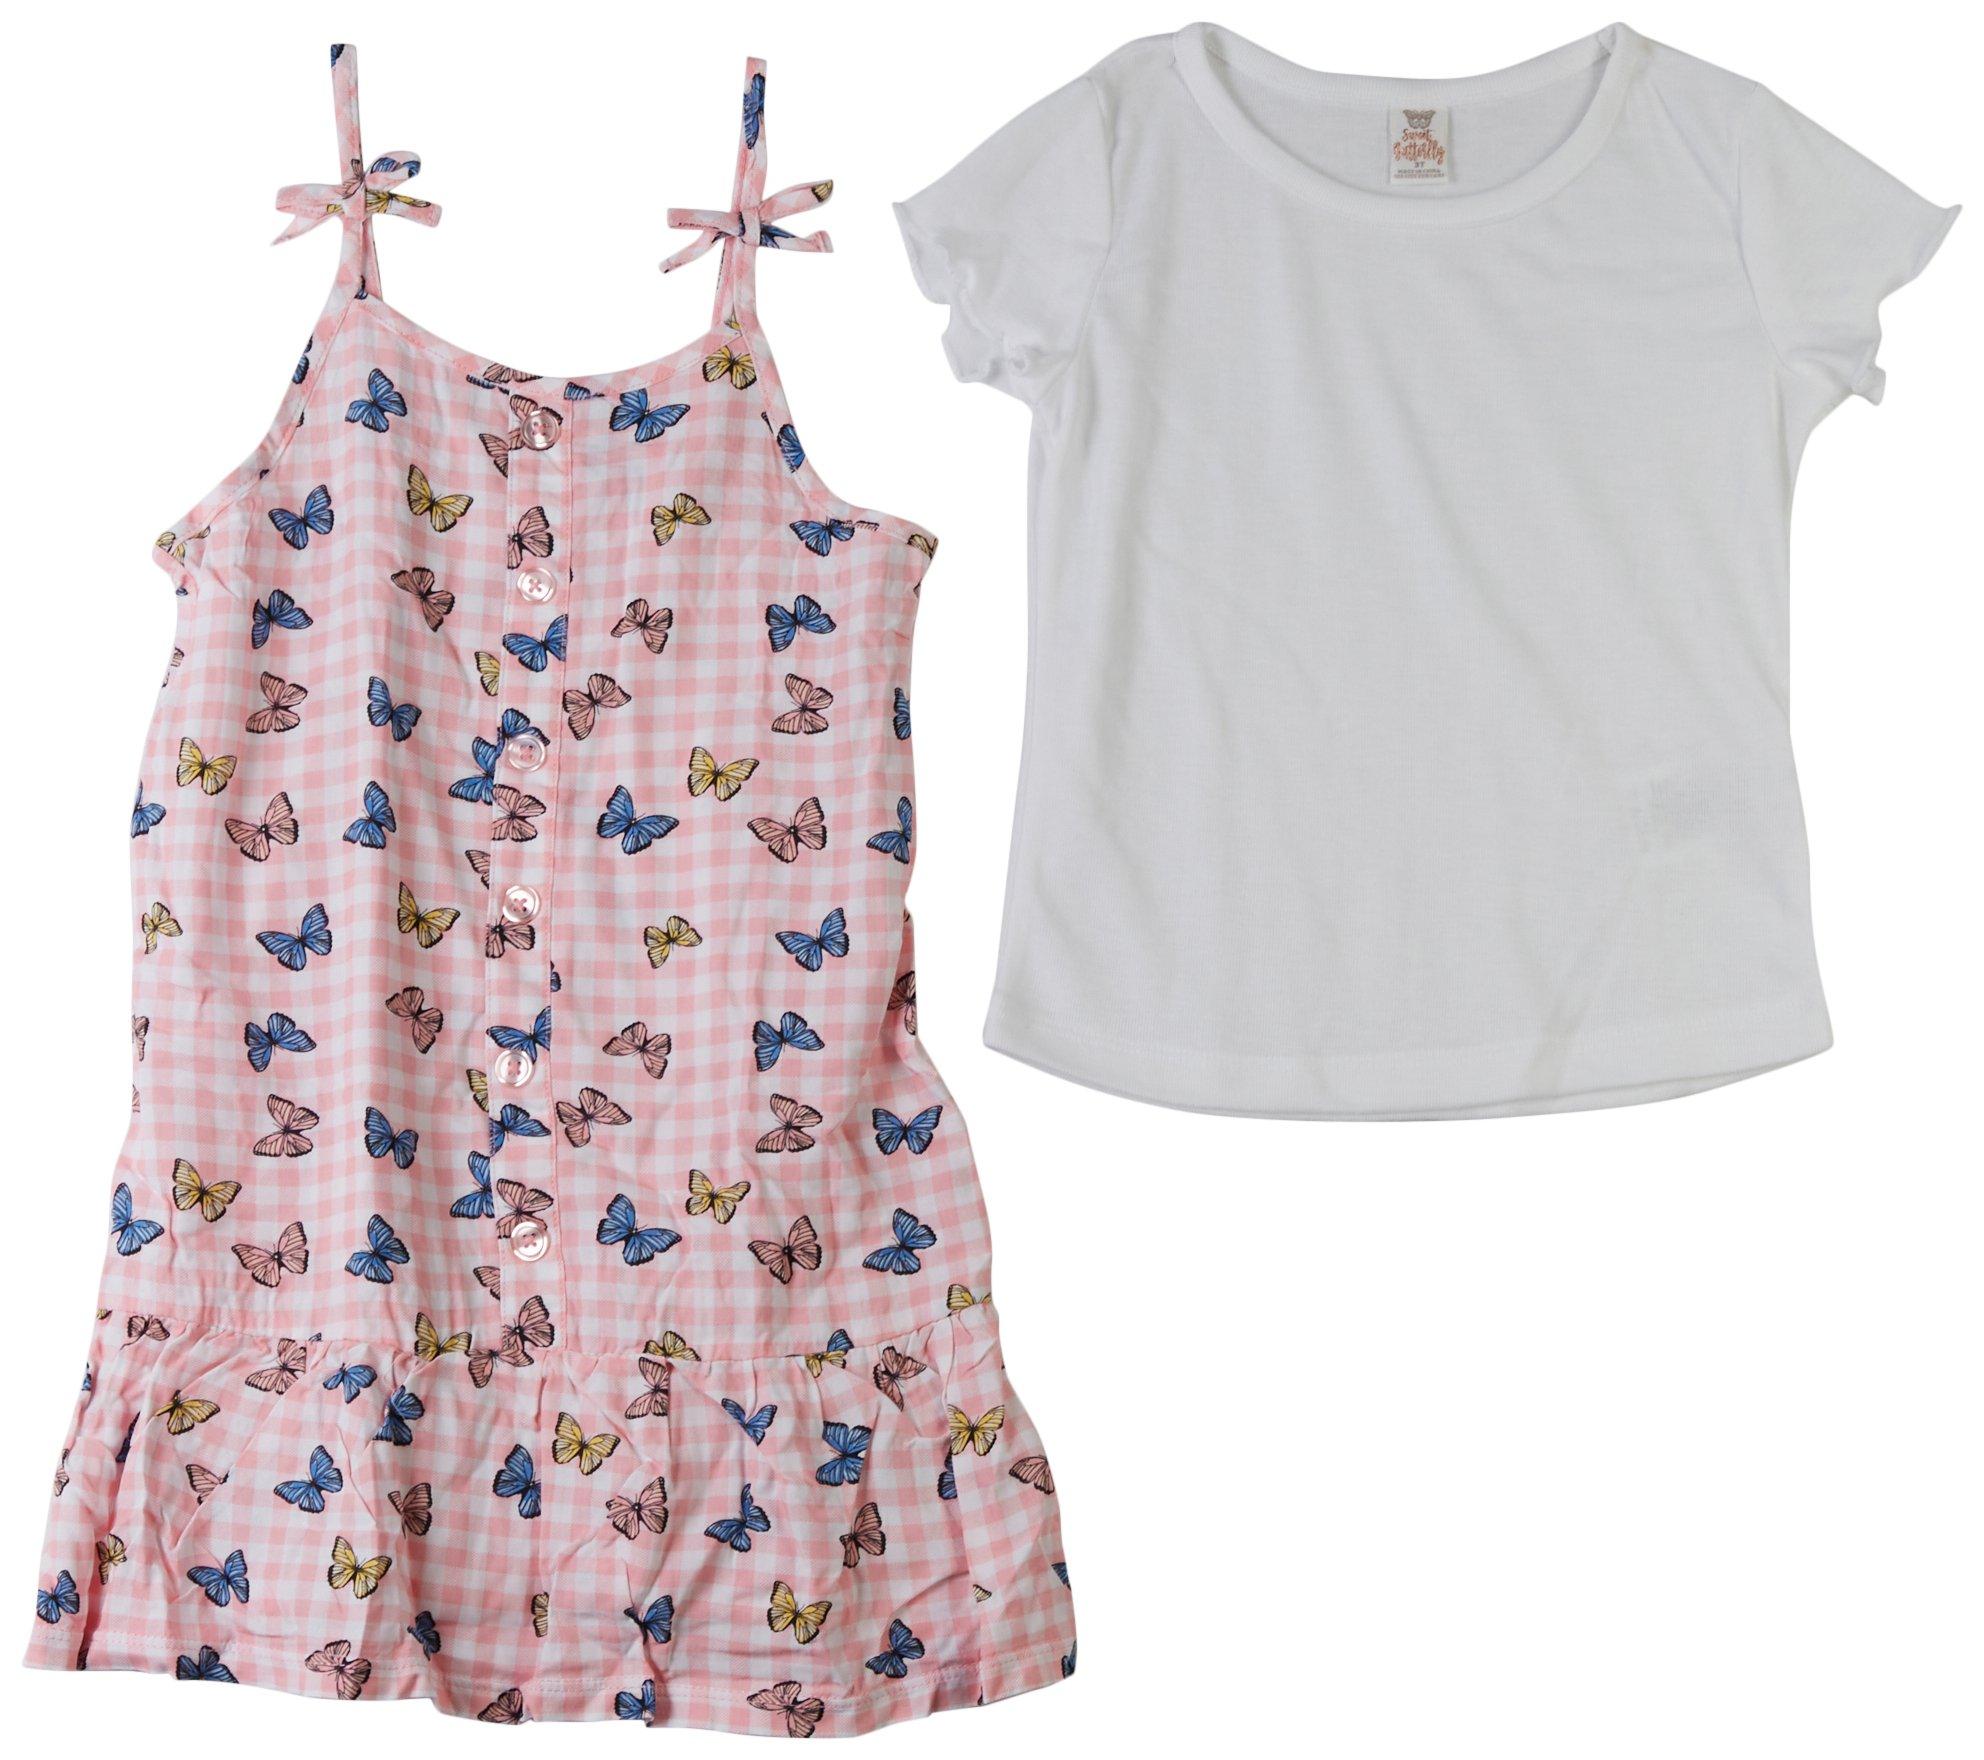 SWEET BUTTERFLY Toddler Girls 2 pc. Butterfly Dress Set